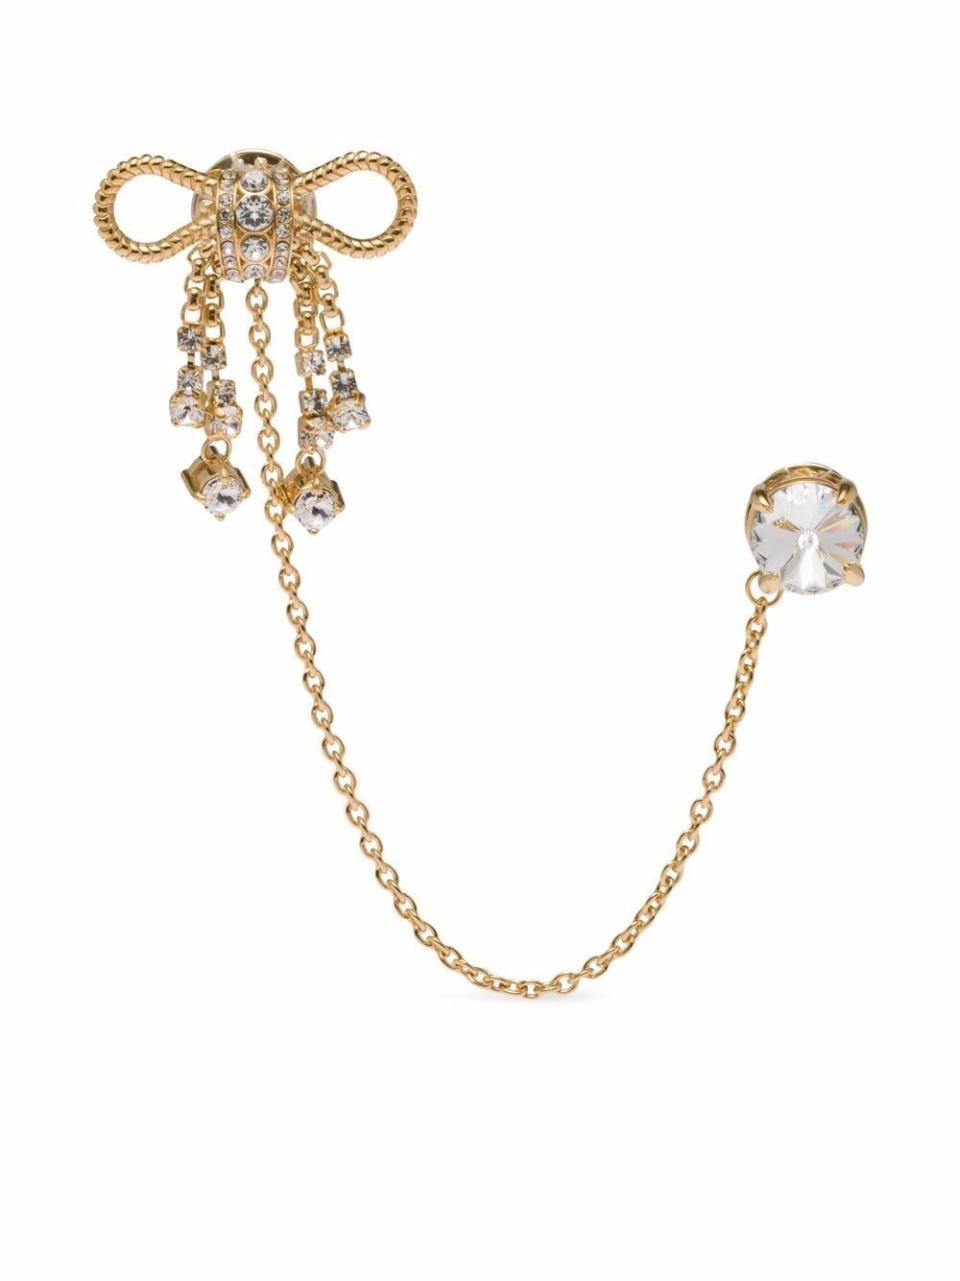 3) Gold-Plated Crystal-Embellished Brooch